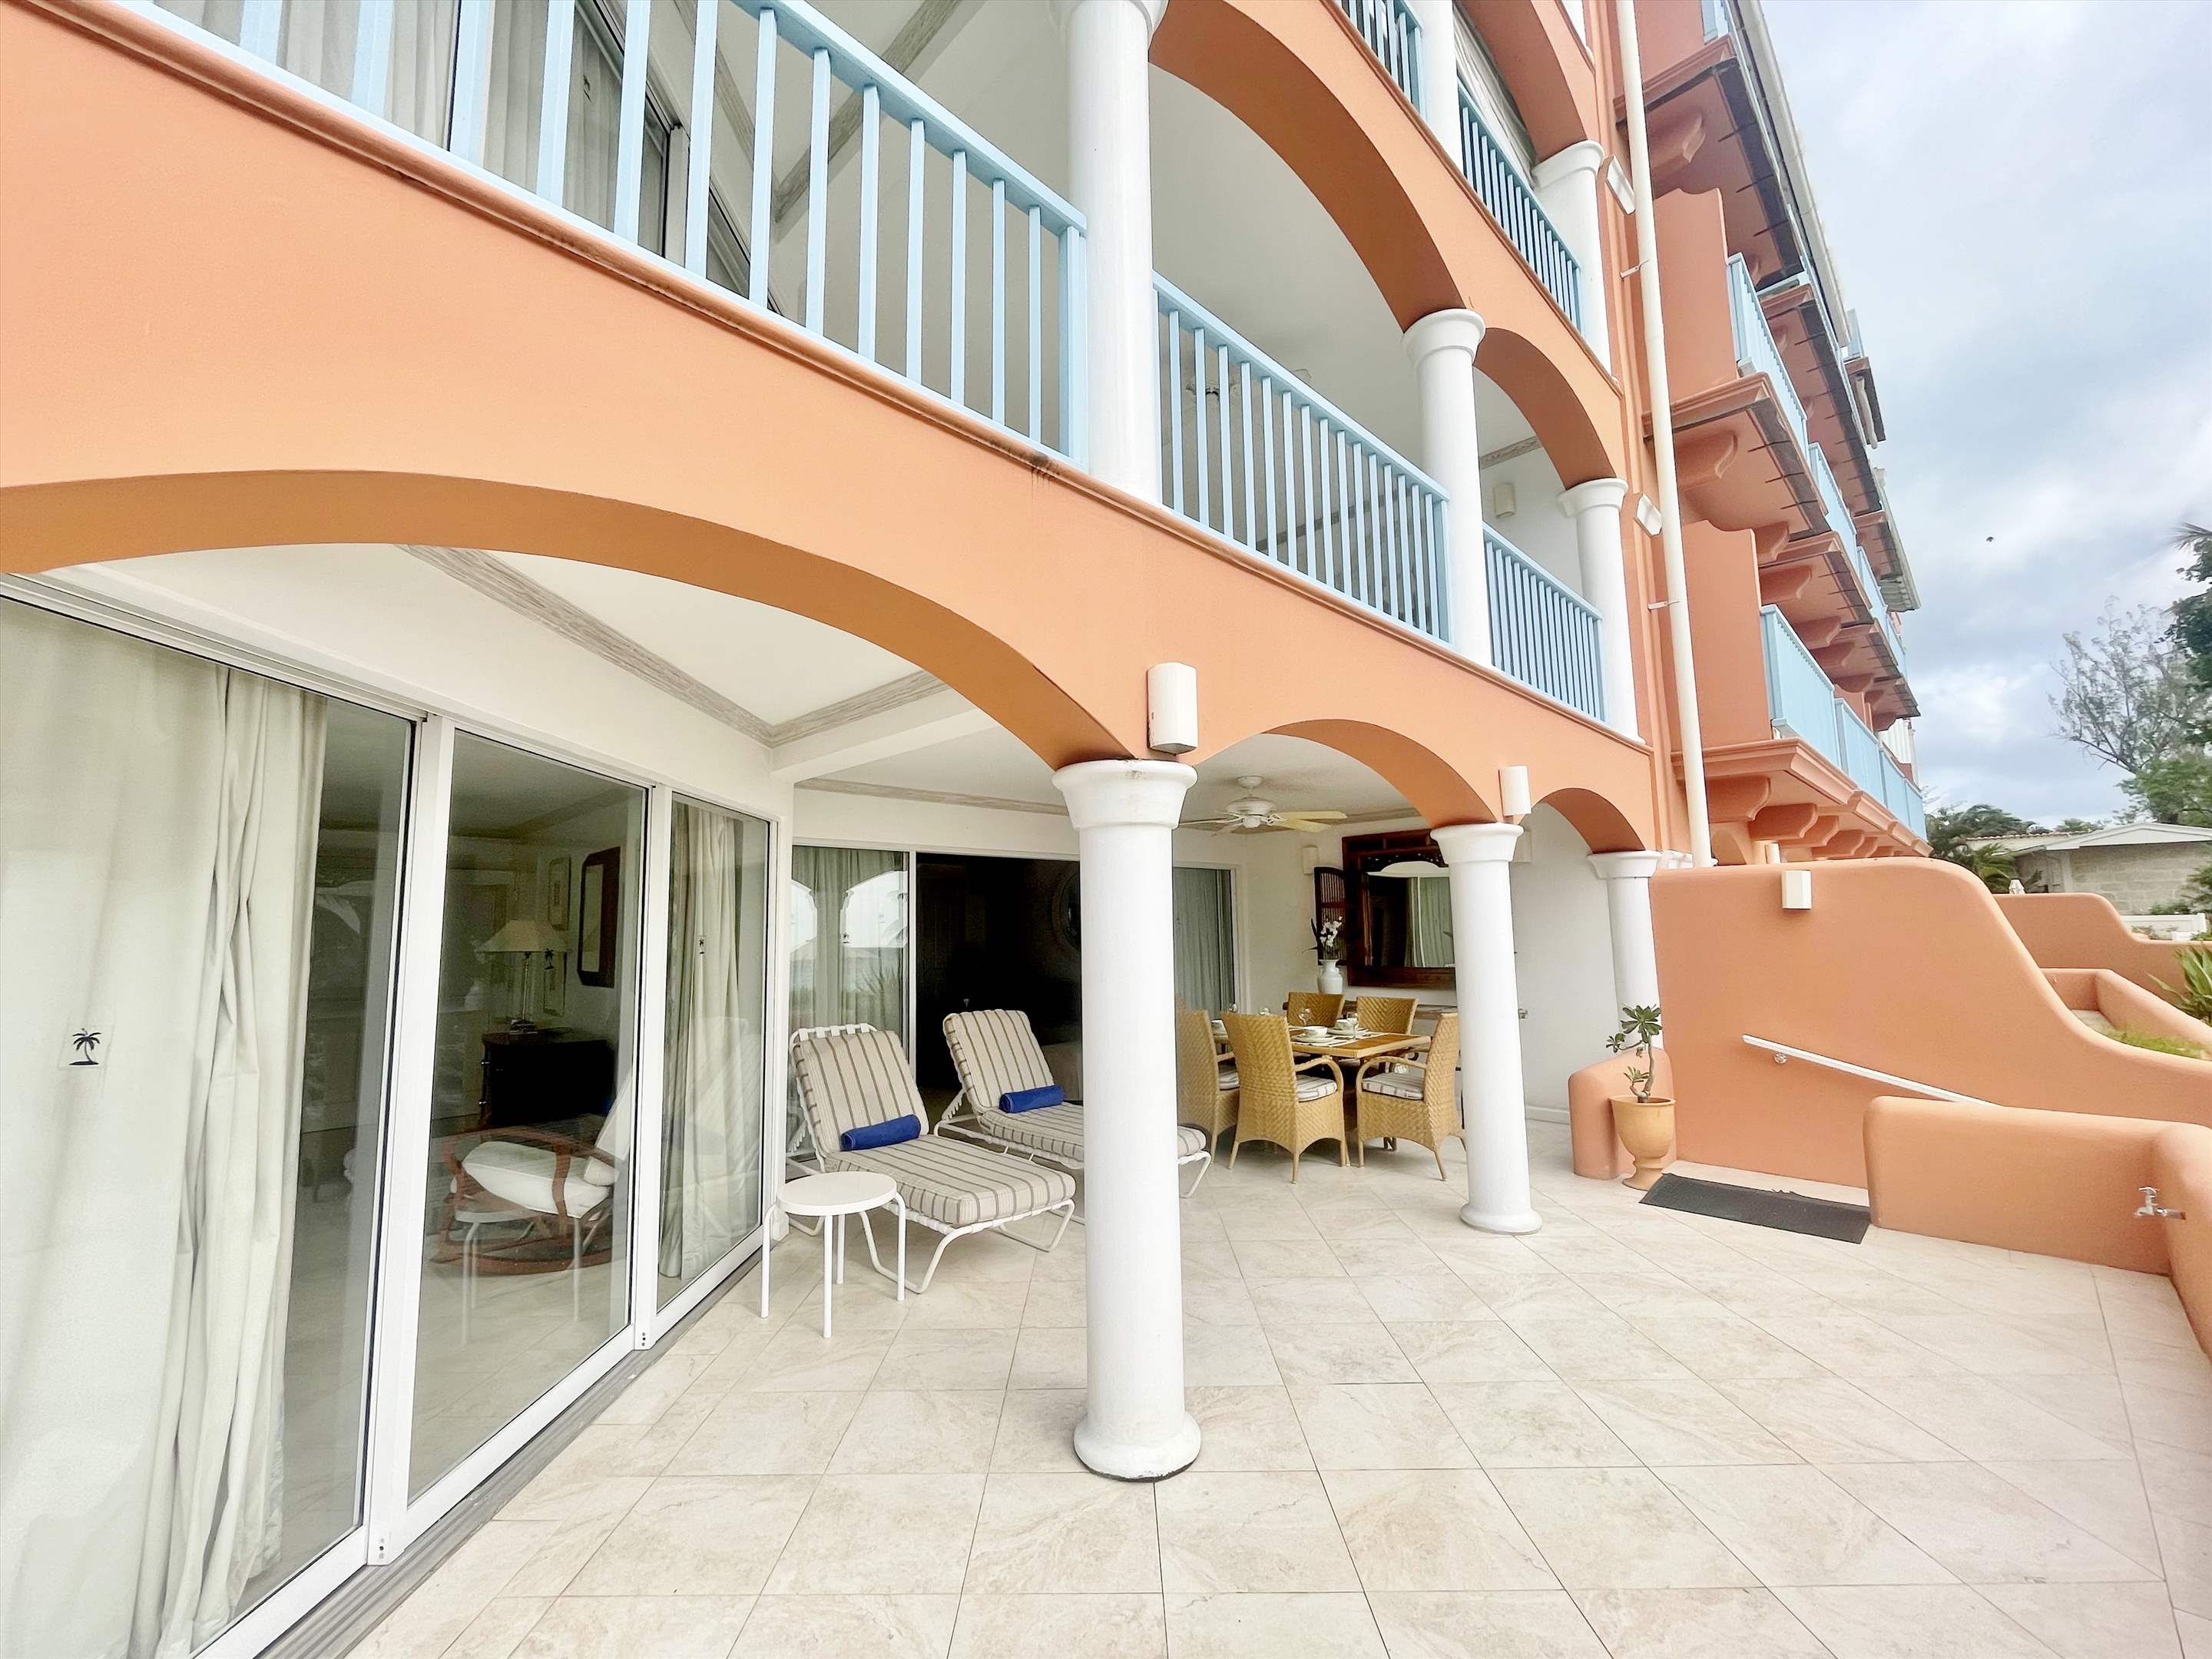 Villas on the Beach 103, 2 bedroom, 2 bedroom apartment in St. James & West Coast, Barbados Photo #9